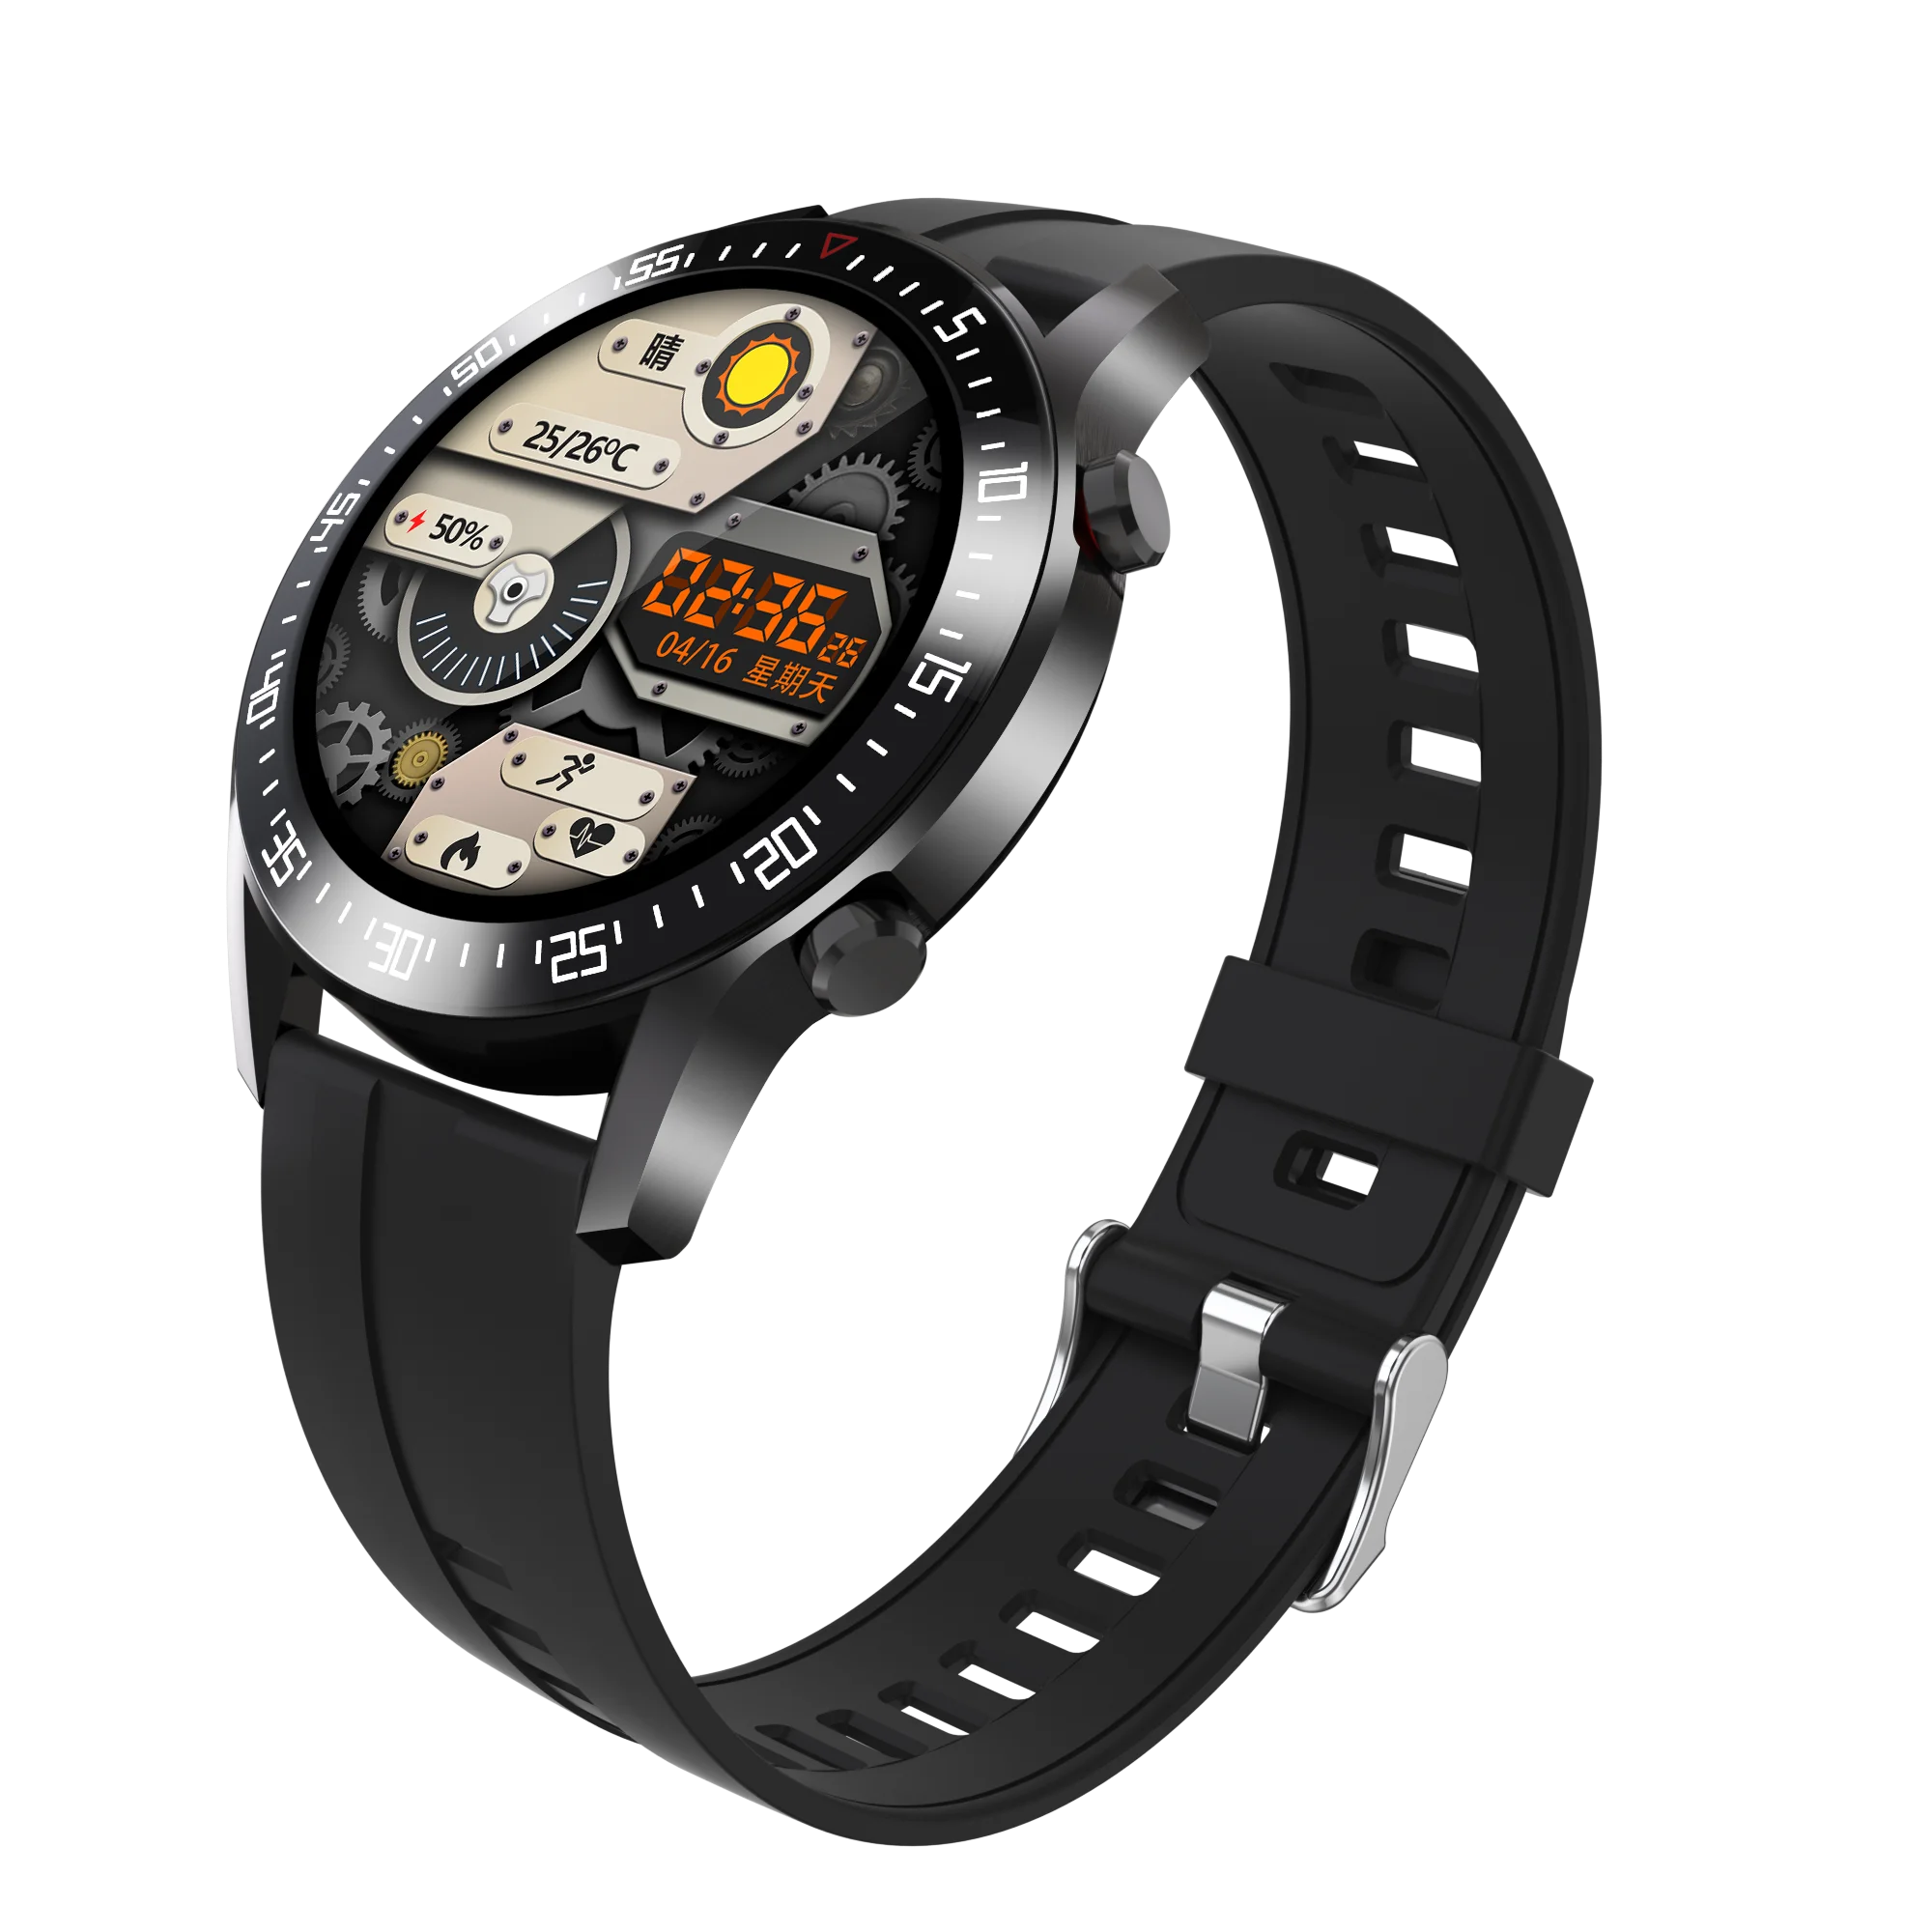 

SKMEI C2 Full Touch 1.3inch Round Screen Smart Watch Heart Rate Monitor Sports Pedometer IP68 Waterproof Smart Watch Men Women